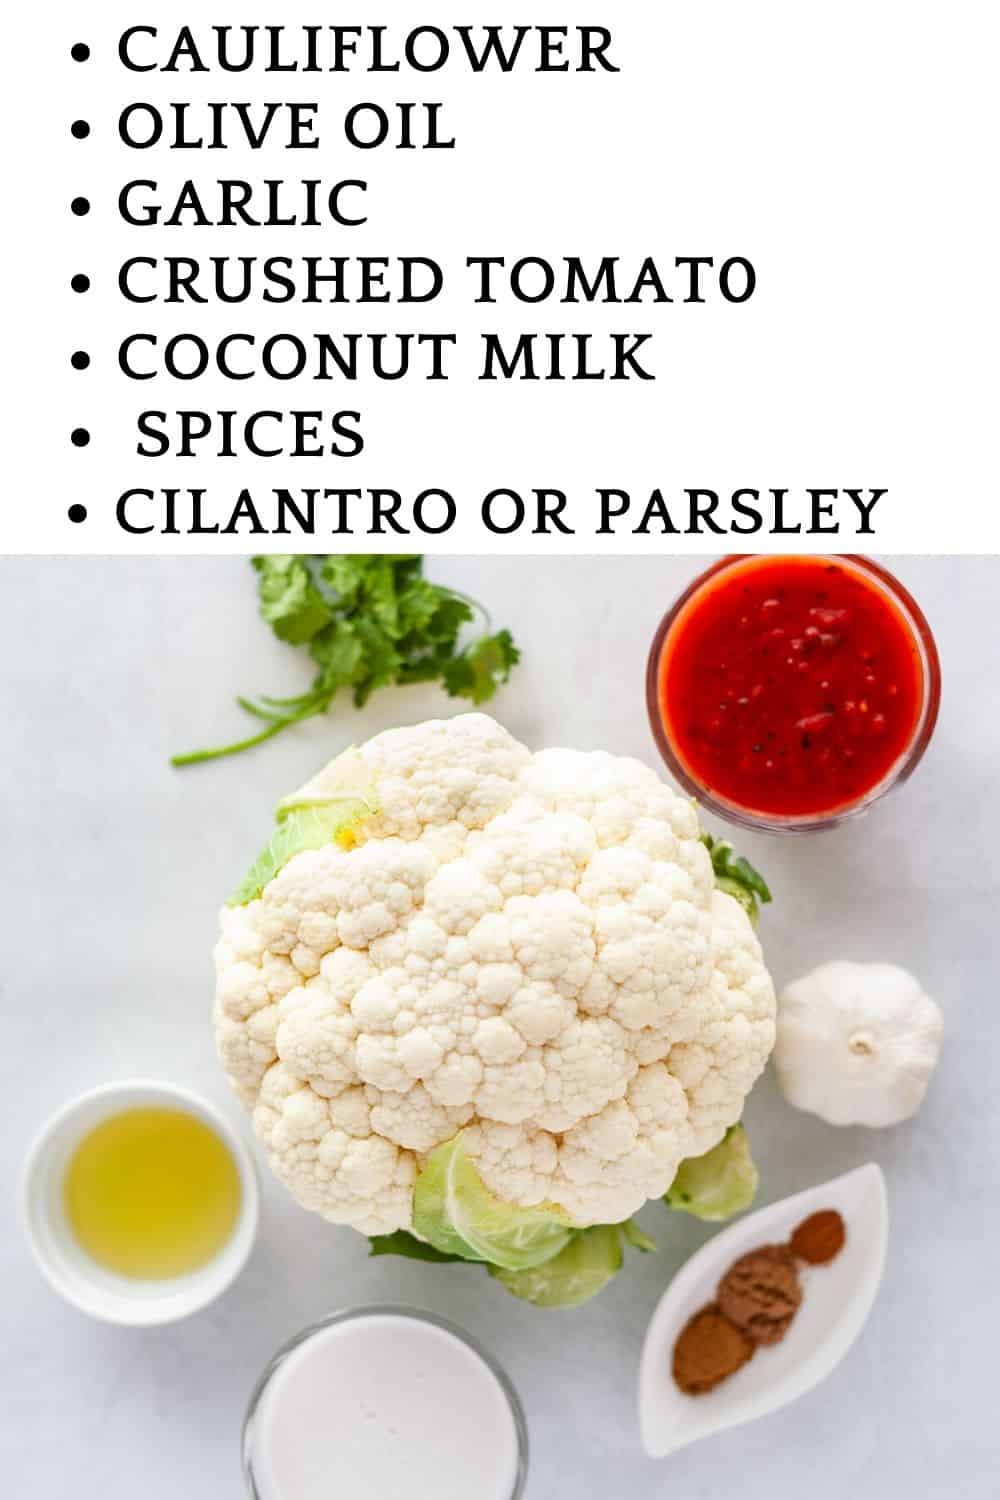 individual ingredients for cauliflower recipe: cauliflower, olive oil, garlic, crushed tomato, coconut milk, spices, cilantro or parsley